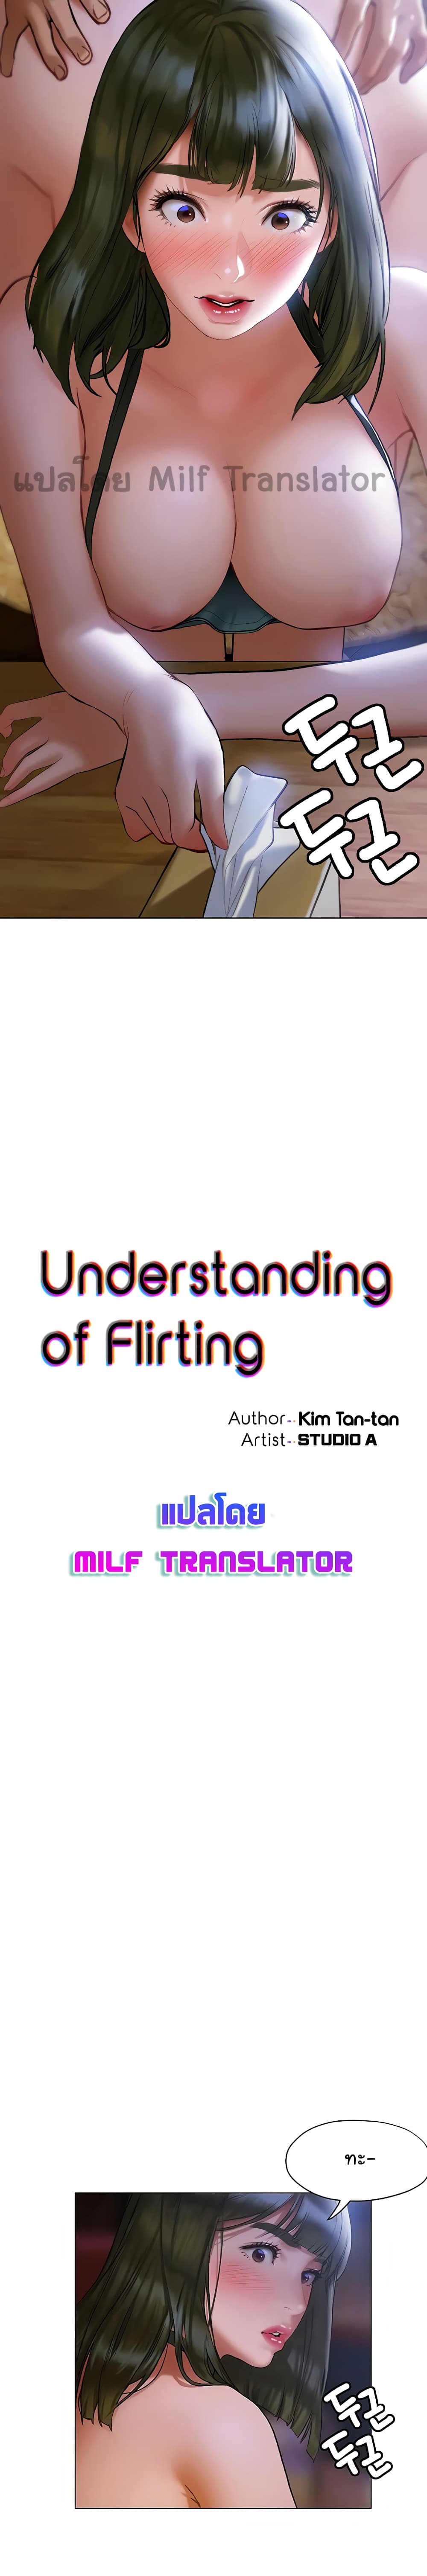 Understanding of Flirting 19 04